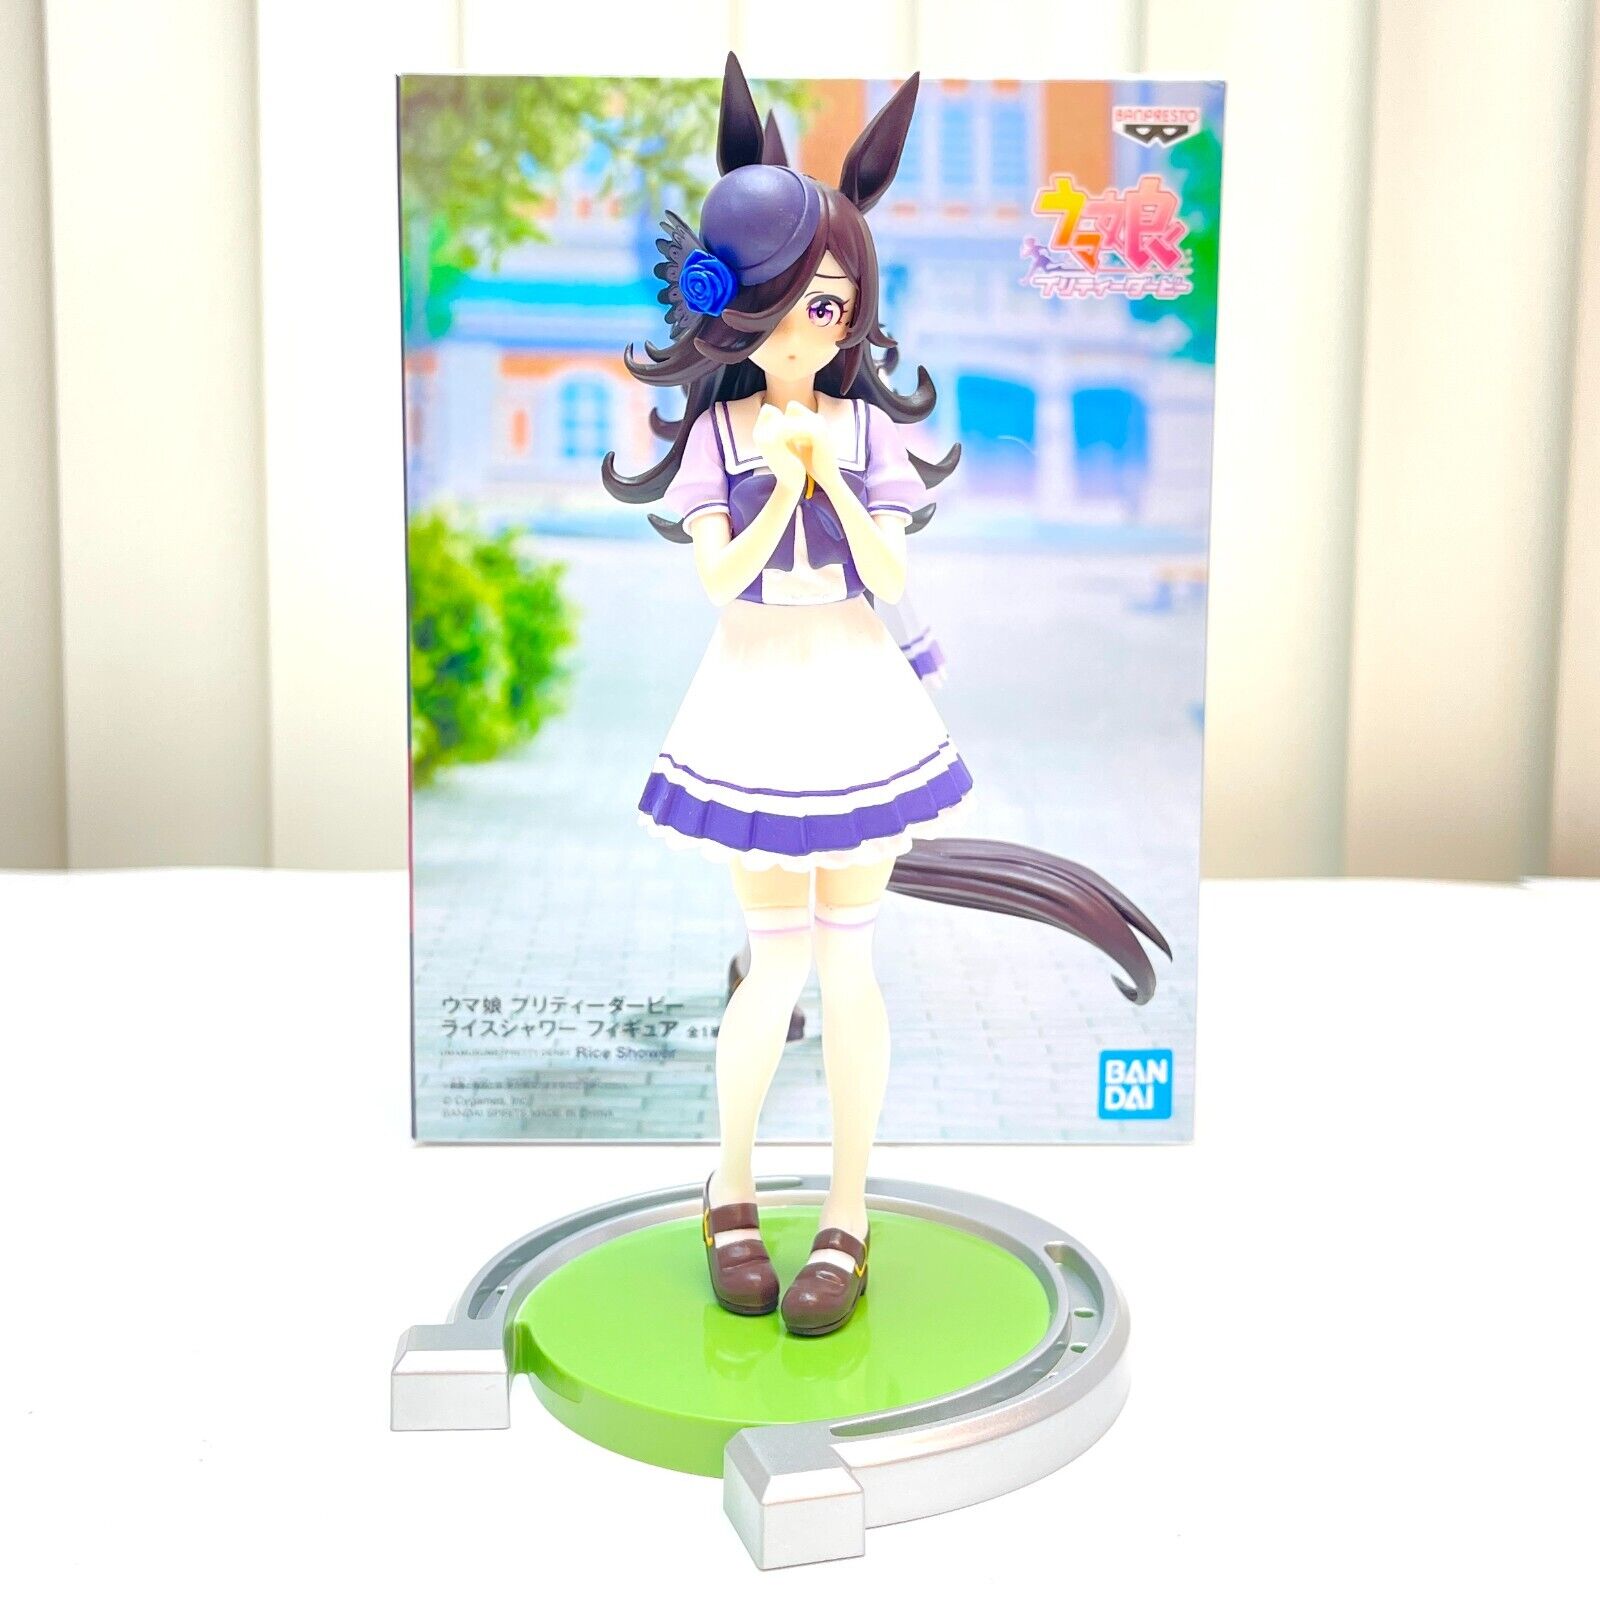 Banpresto Uma Musume Pretty Derby Anime Game Figure Toy Rice Shower BP18811